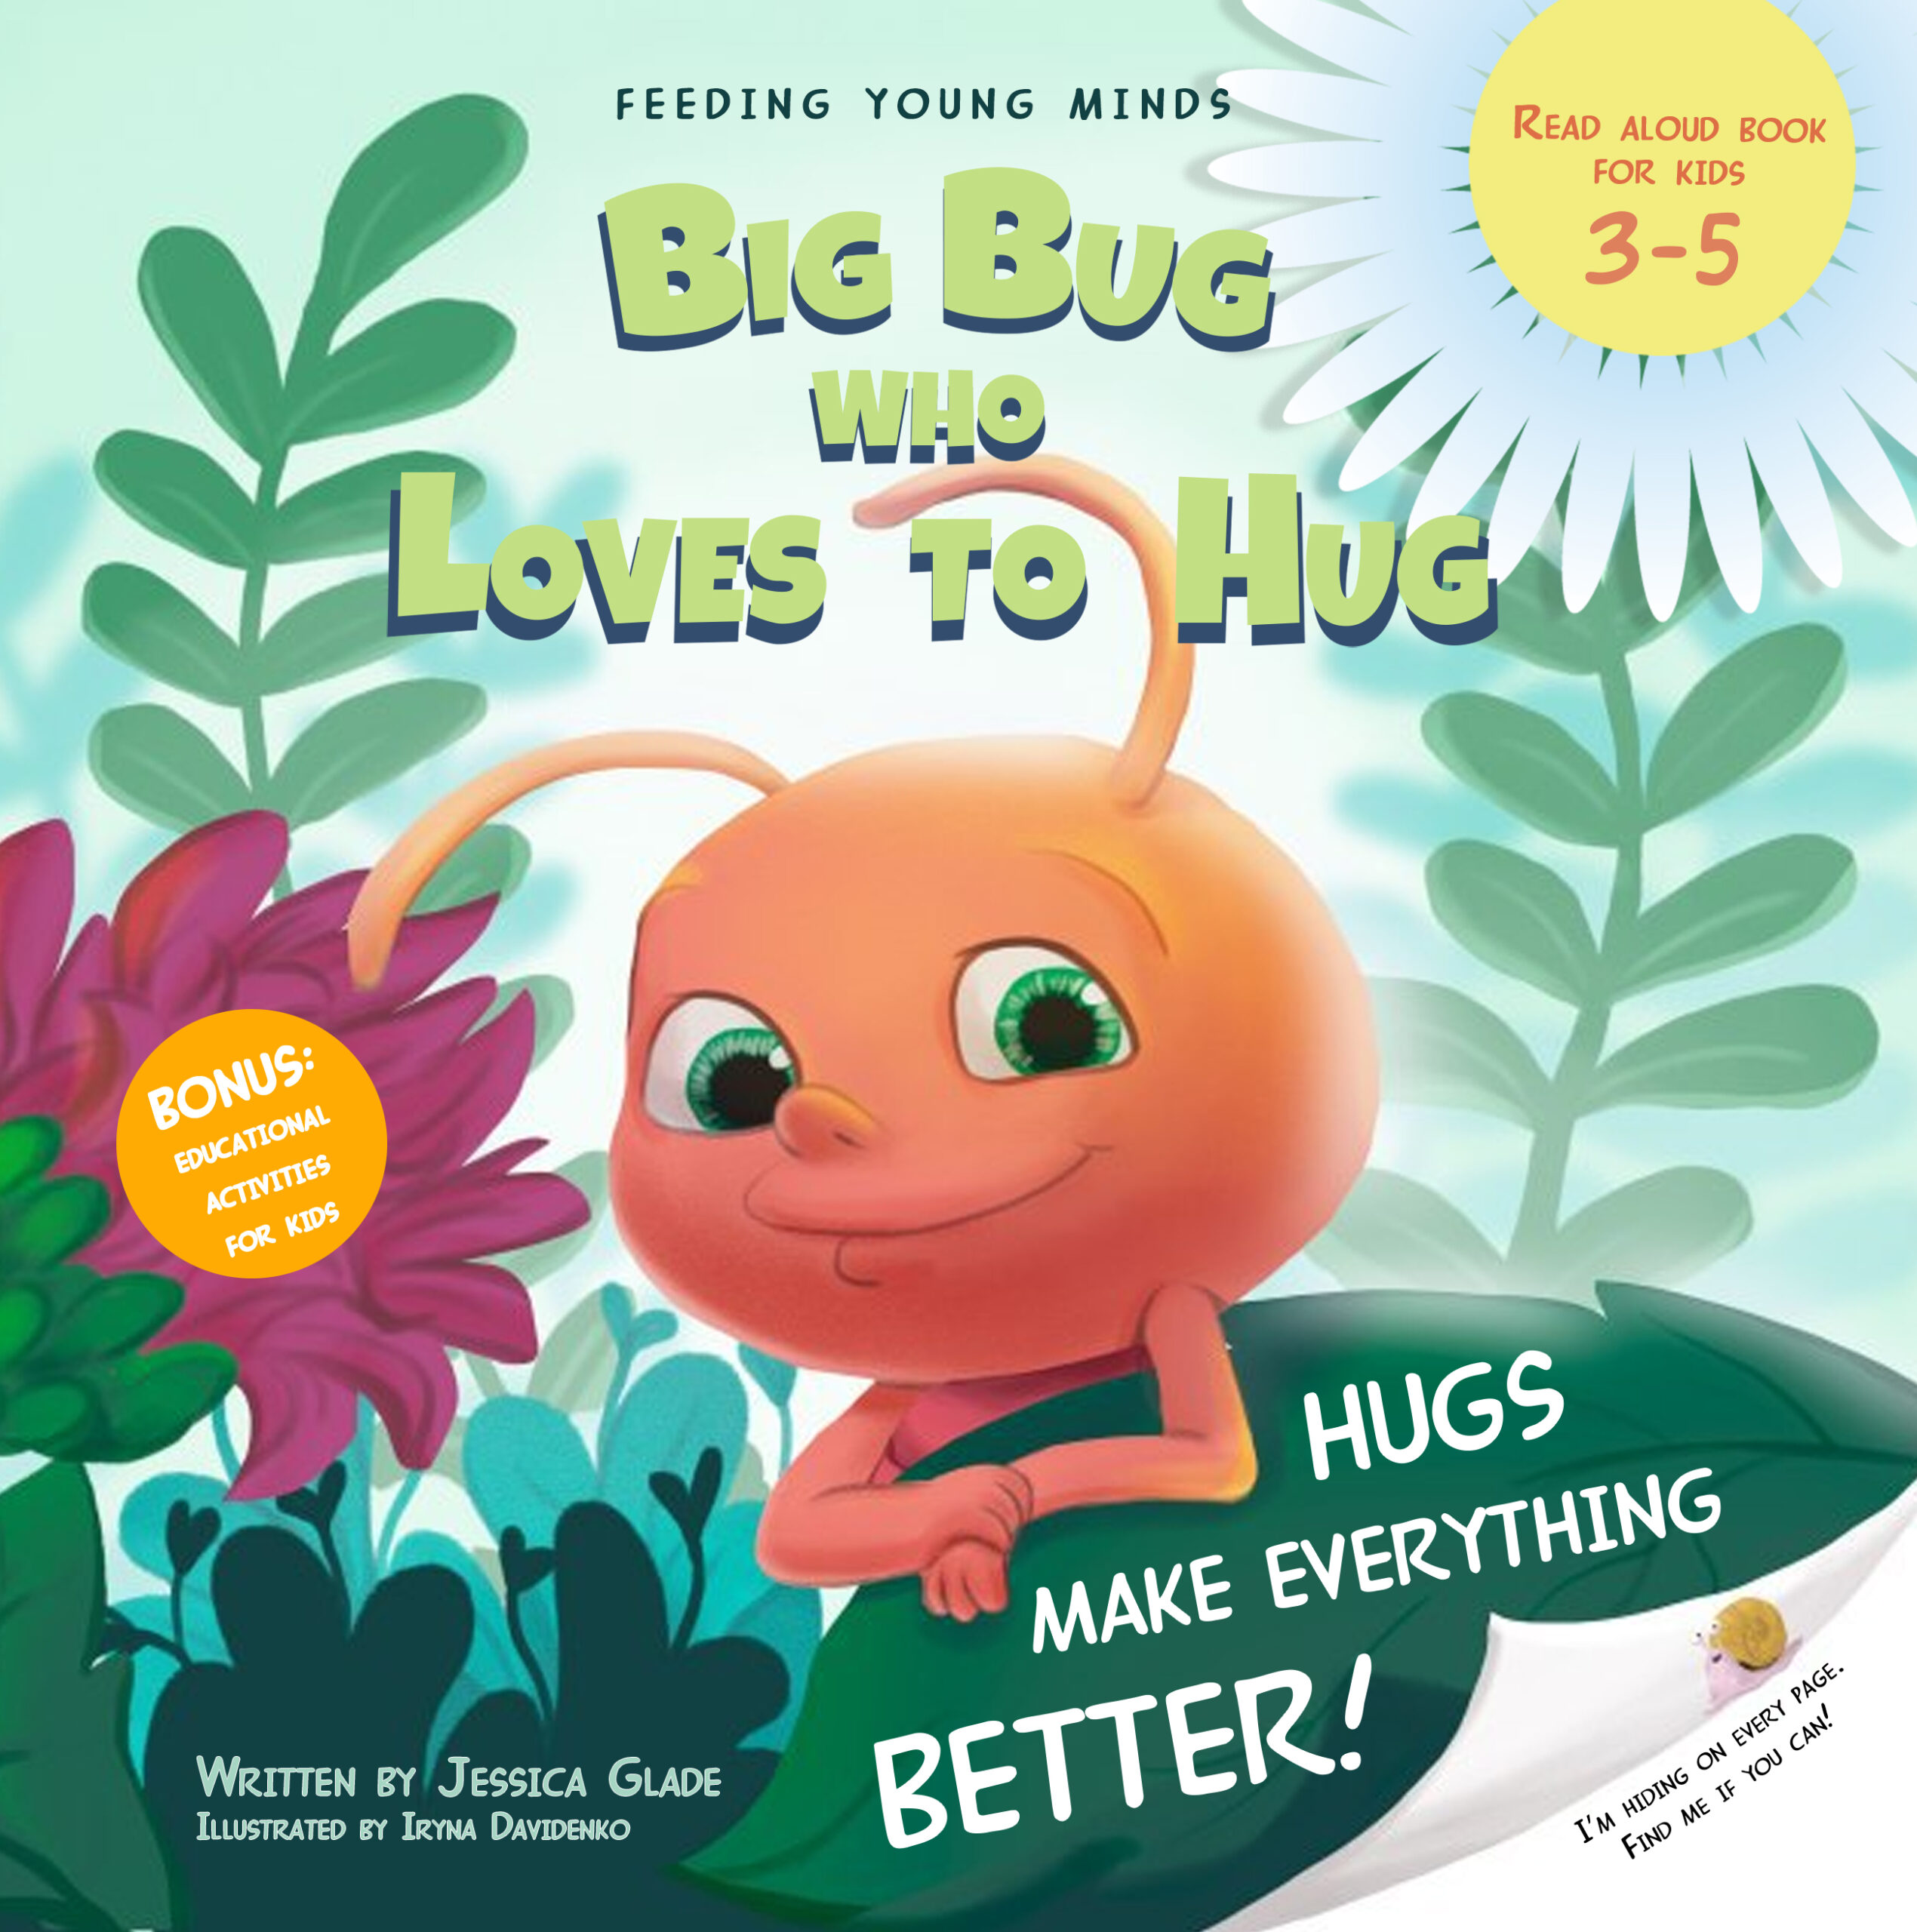 FREE: Big Bug who Loves to Hug by Jessica Glade